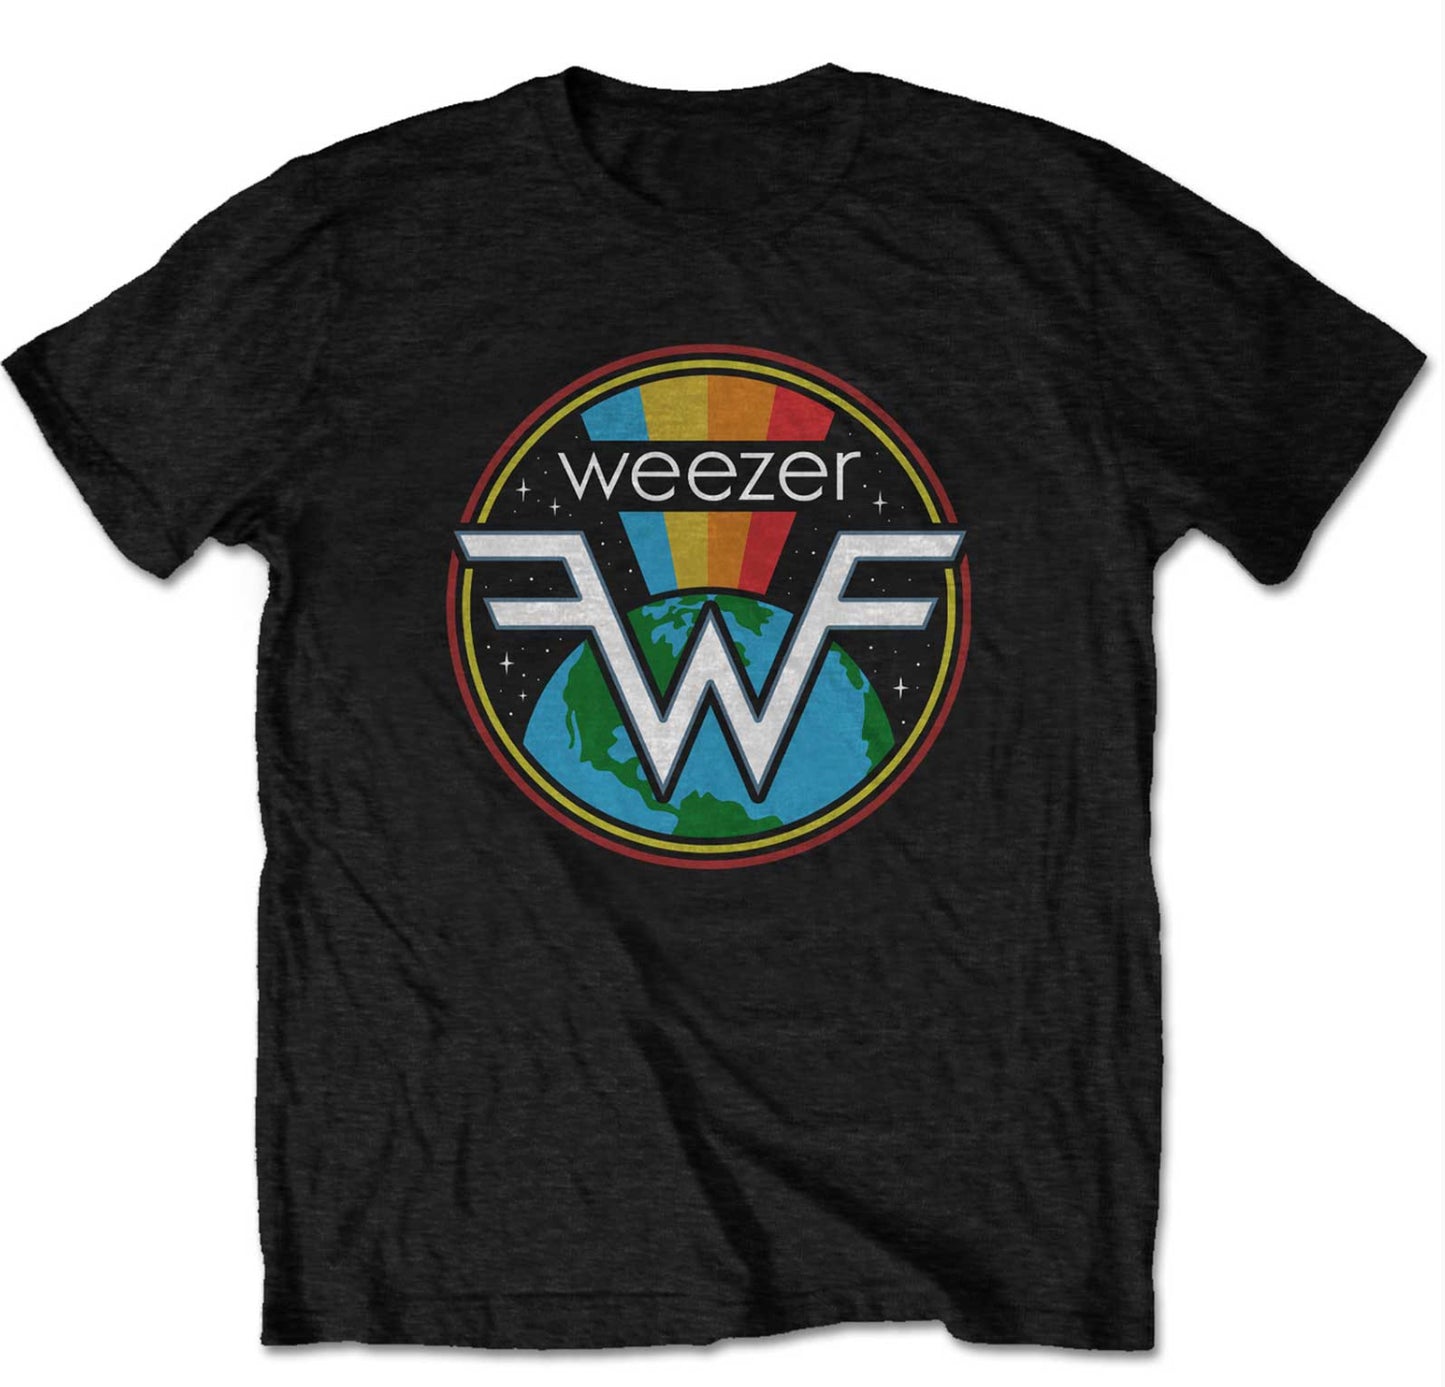 Weezer T-shirts